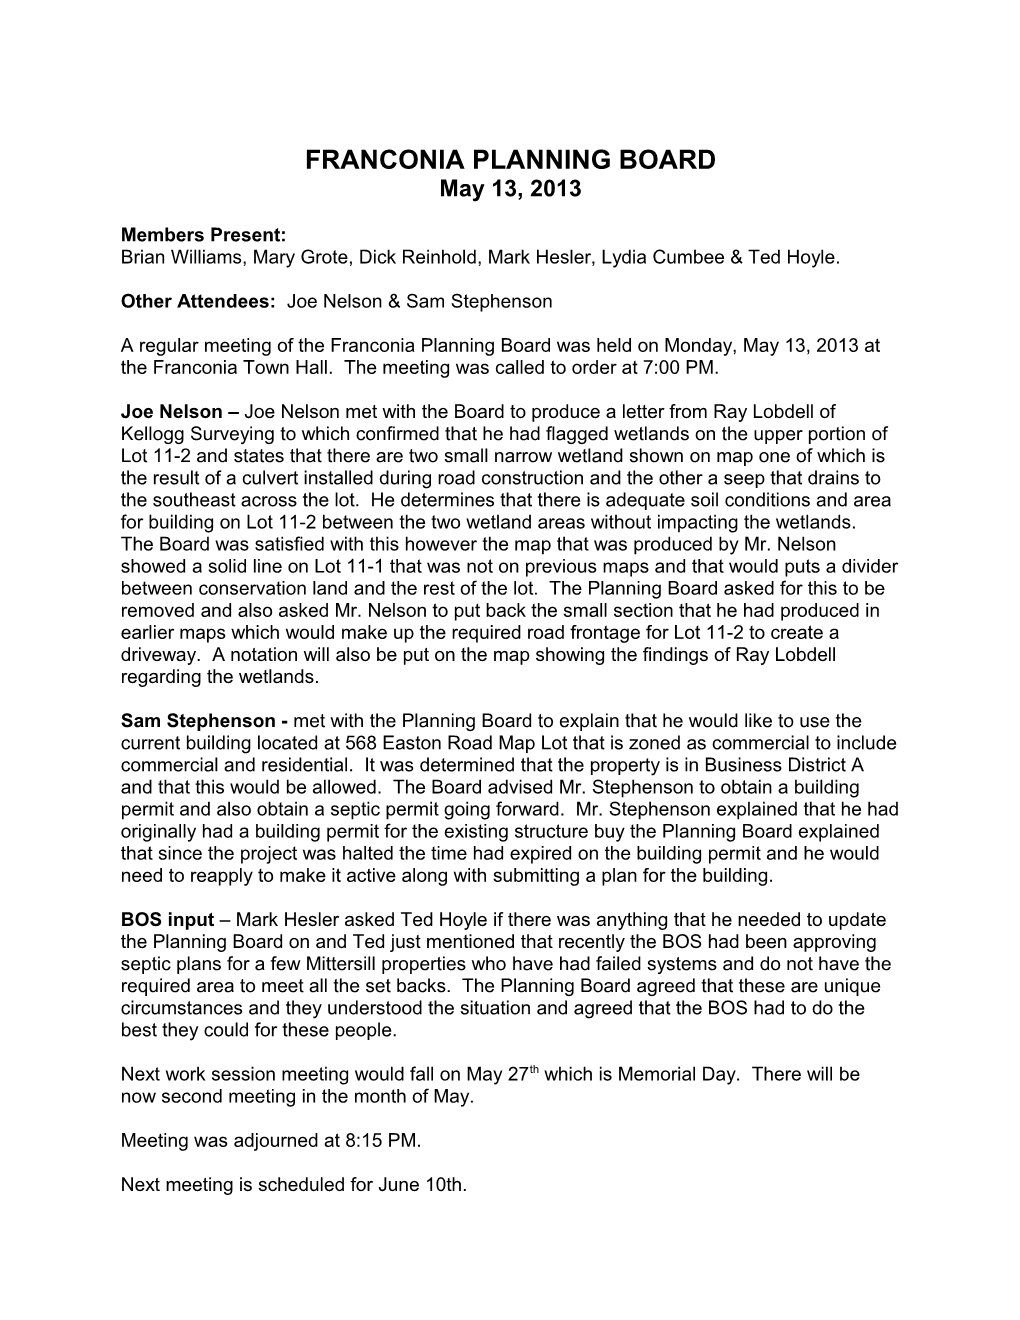 Franconia Planning Board s1